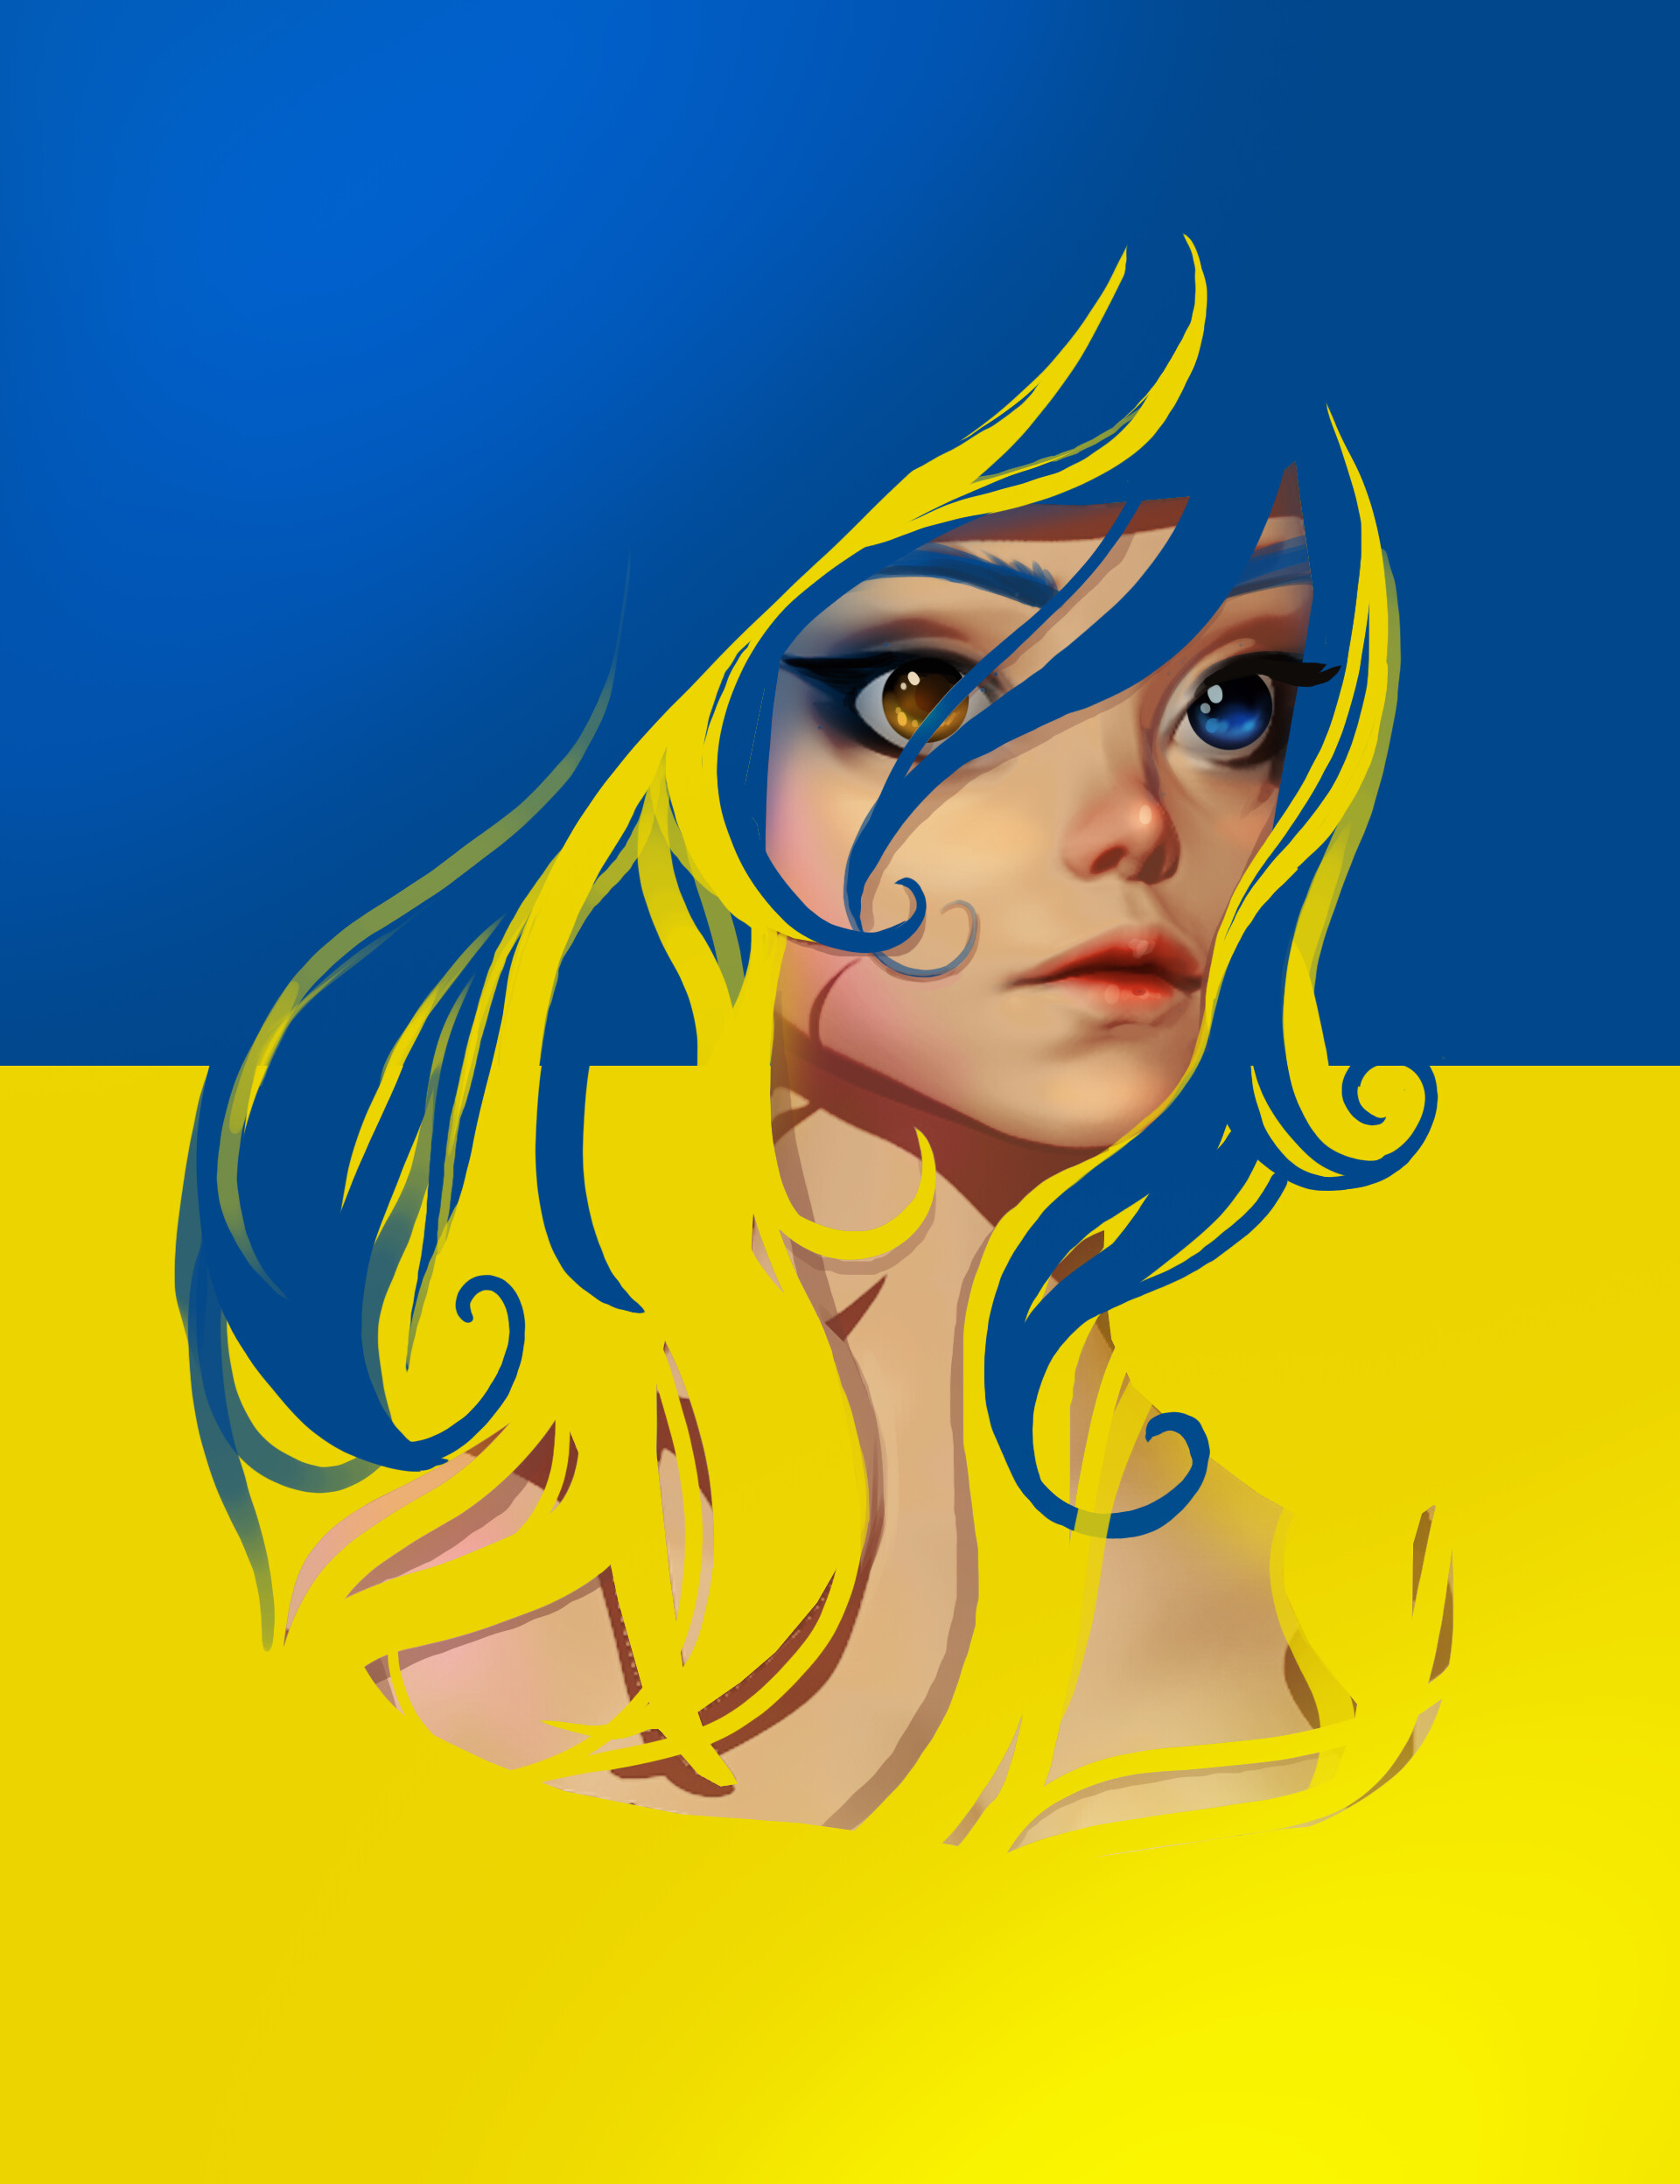 Artwork Digital Art Illustration Fictional Character Ukraine Minimalism Blue Yellow Women Heterochro 1920x2496